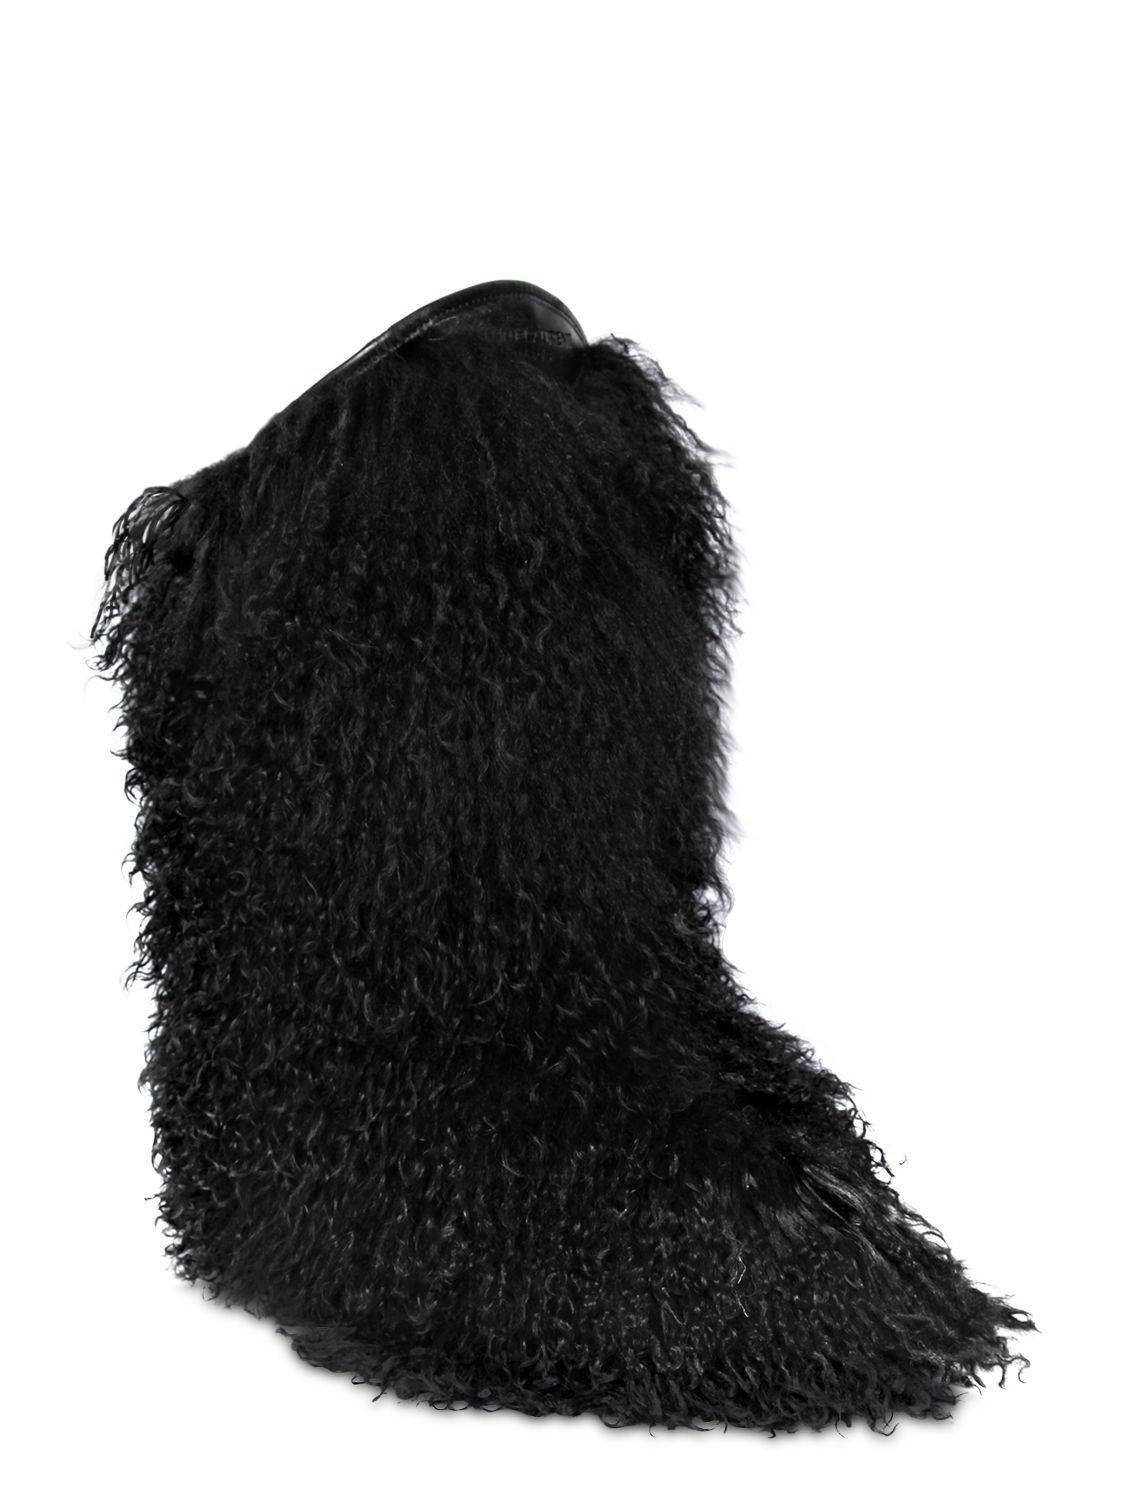 Furry Black Boots - munimoro.gob.pe